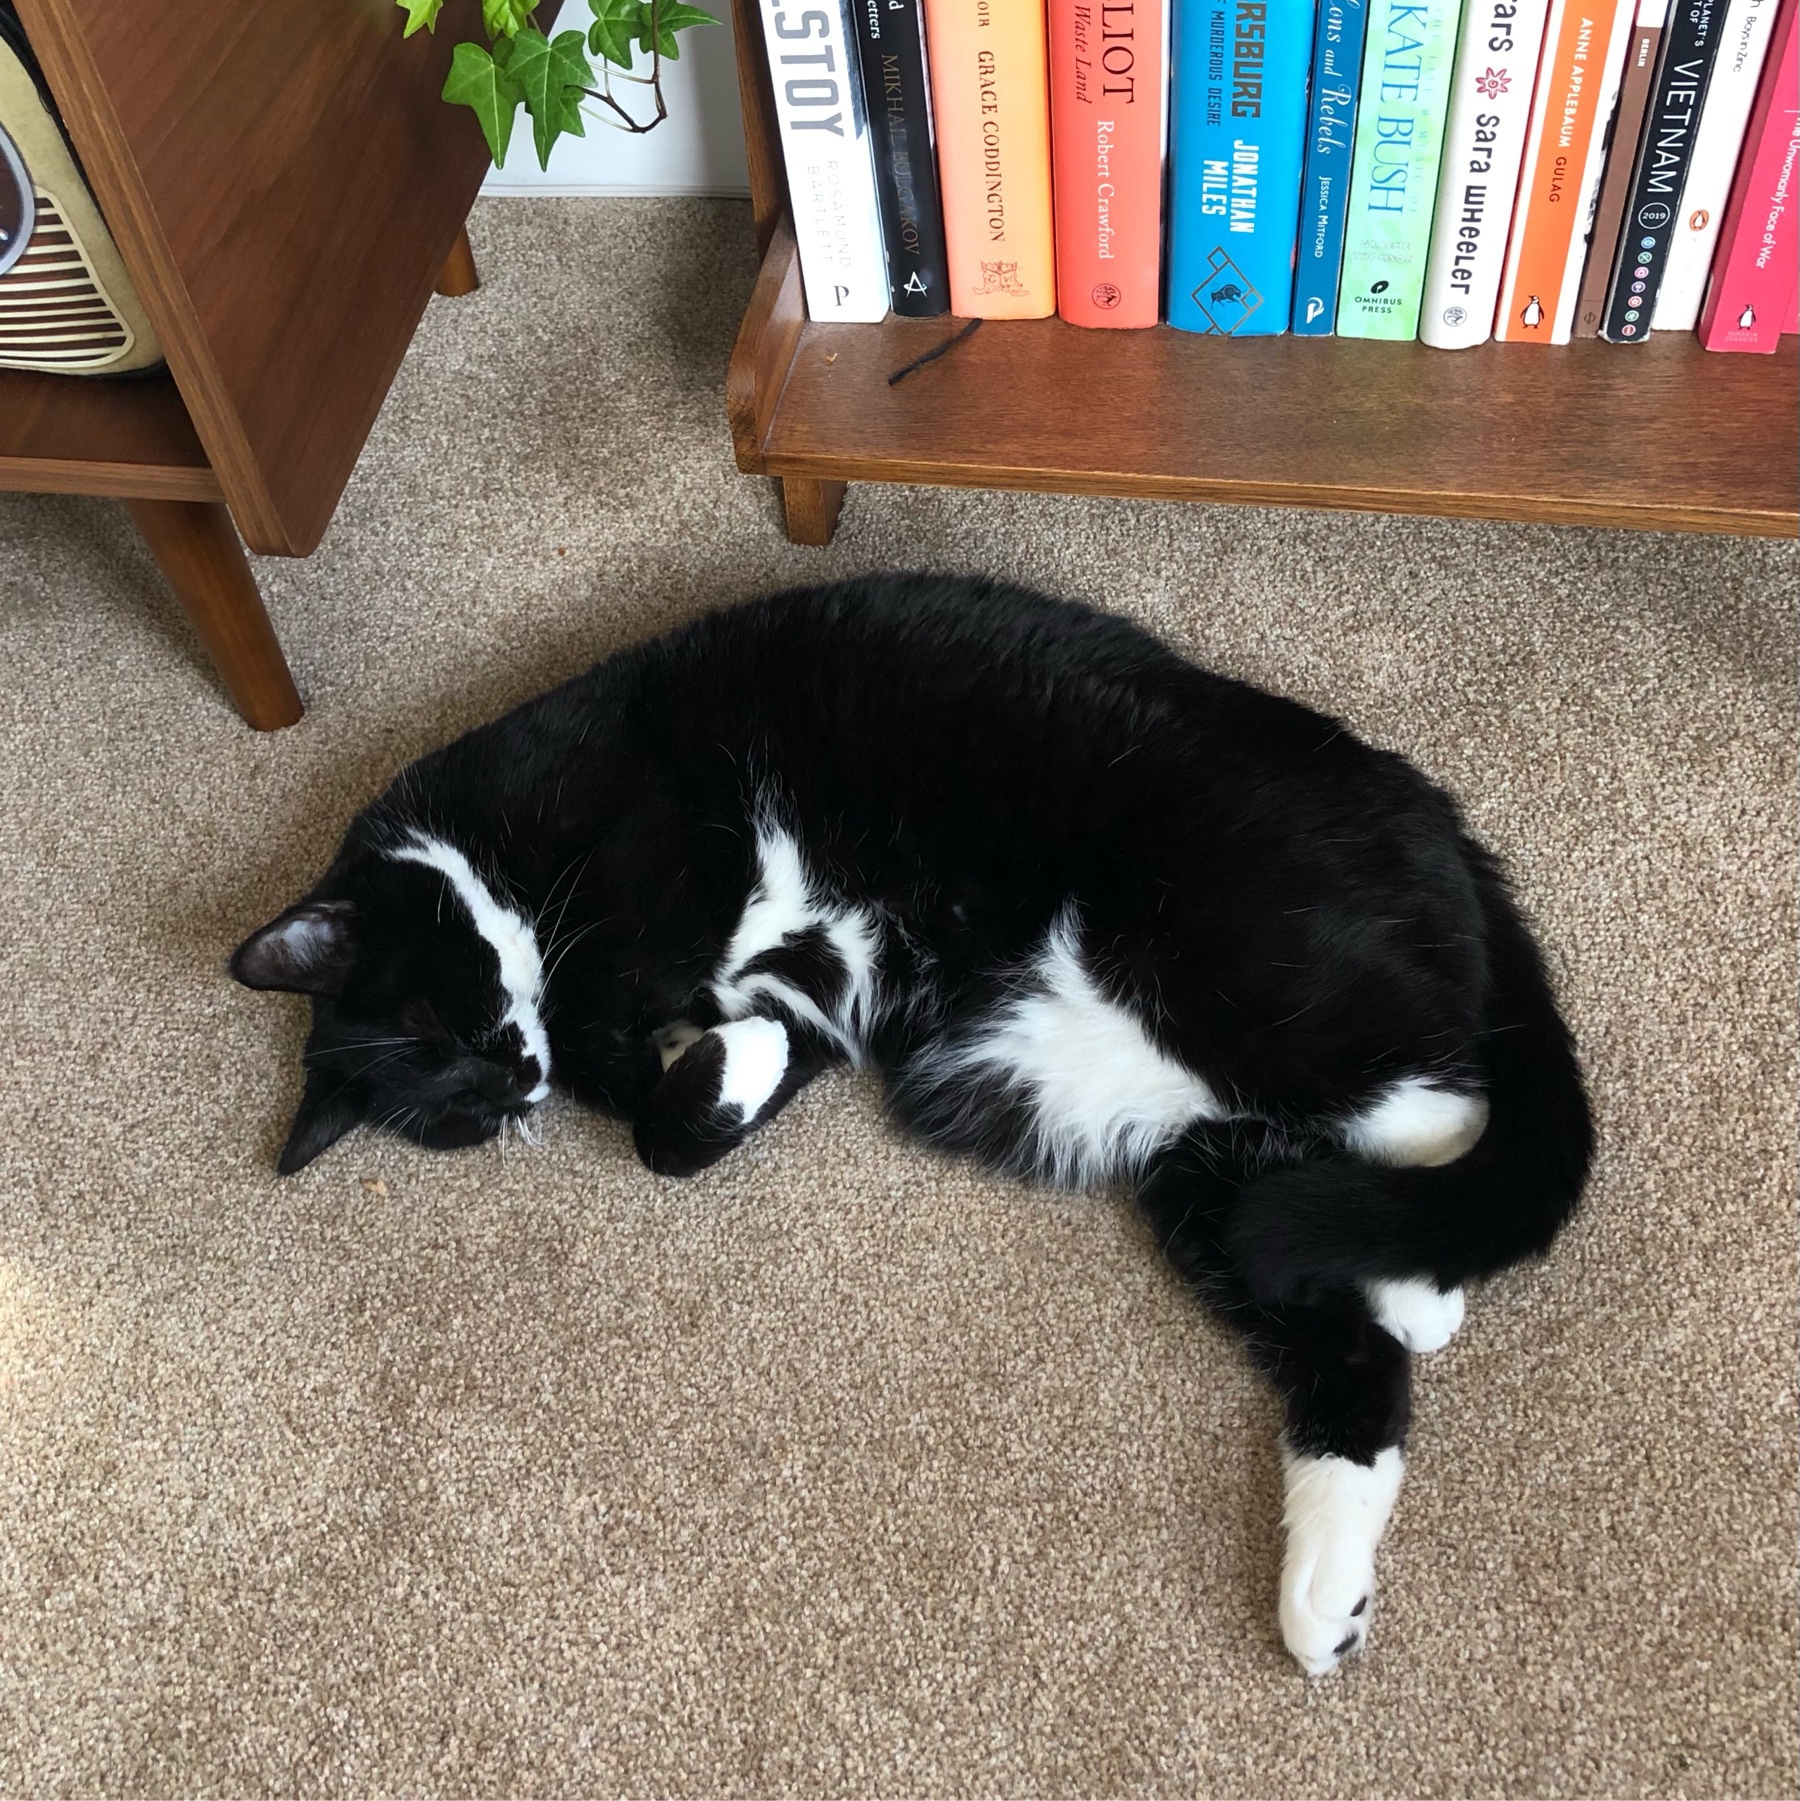 Black cat sleeping on brown carpet nexr to bookshelf